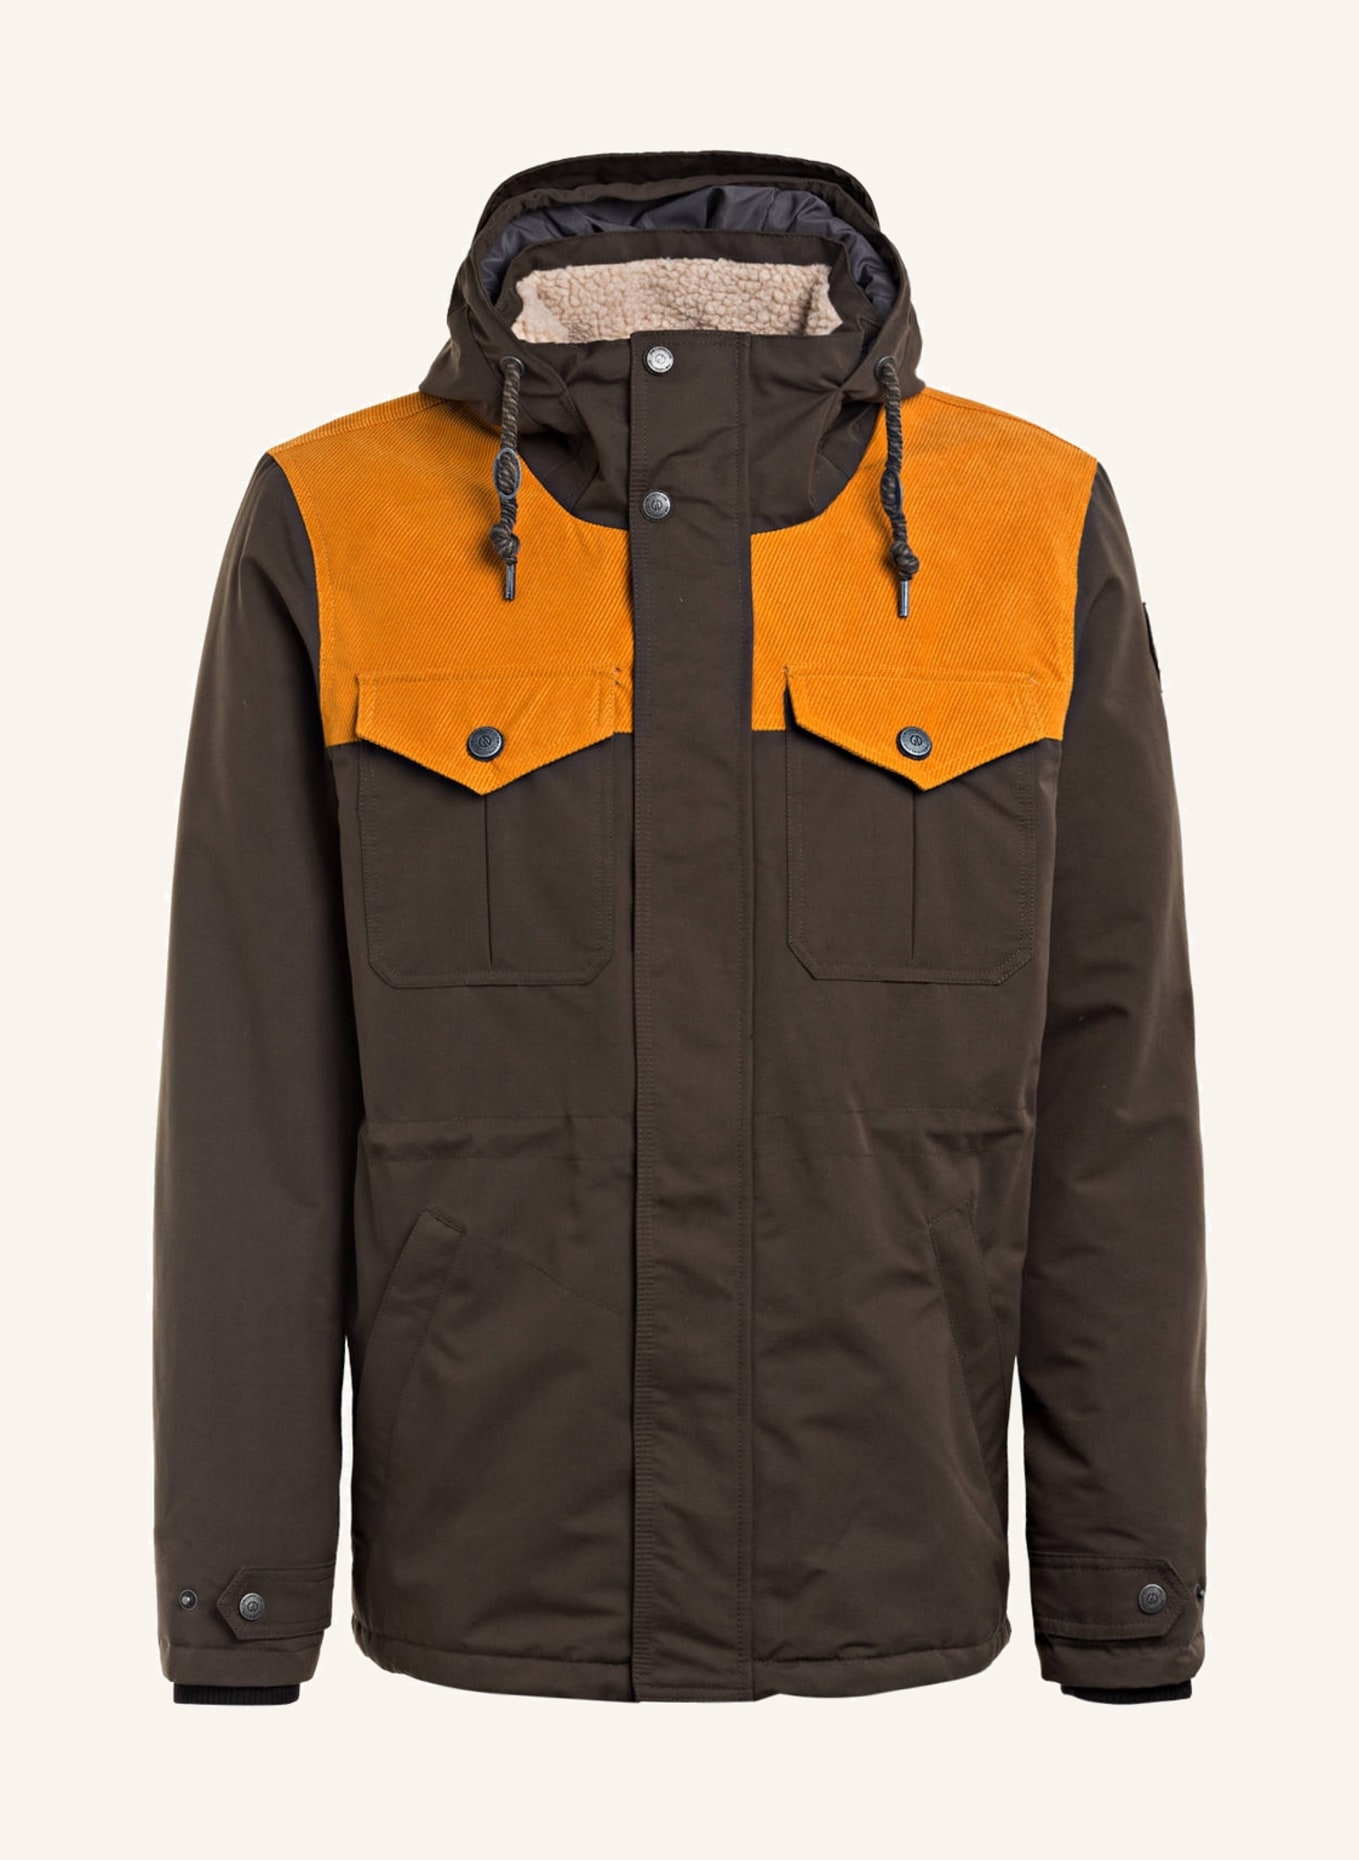 jacket killtec by STORMIGA Outdoor orange G.I.G.A. DX in dark brown/